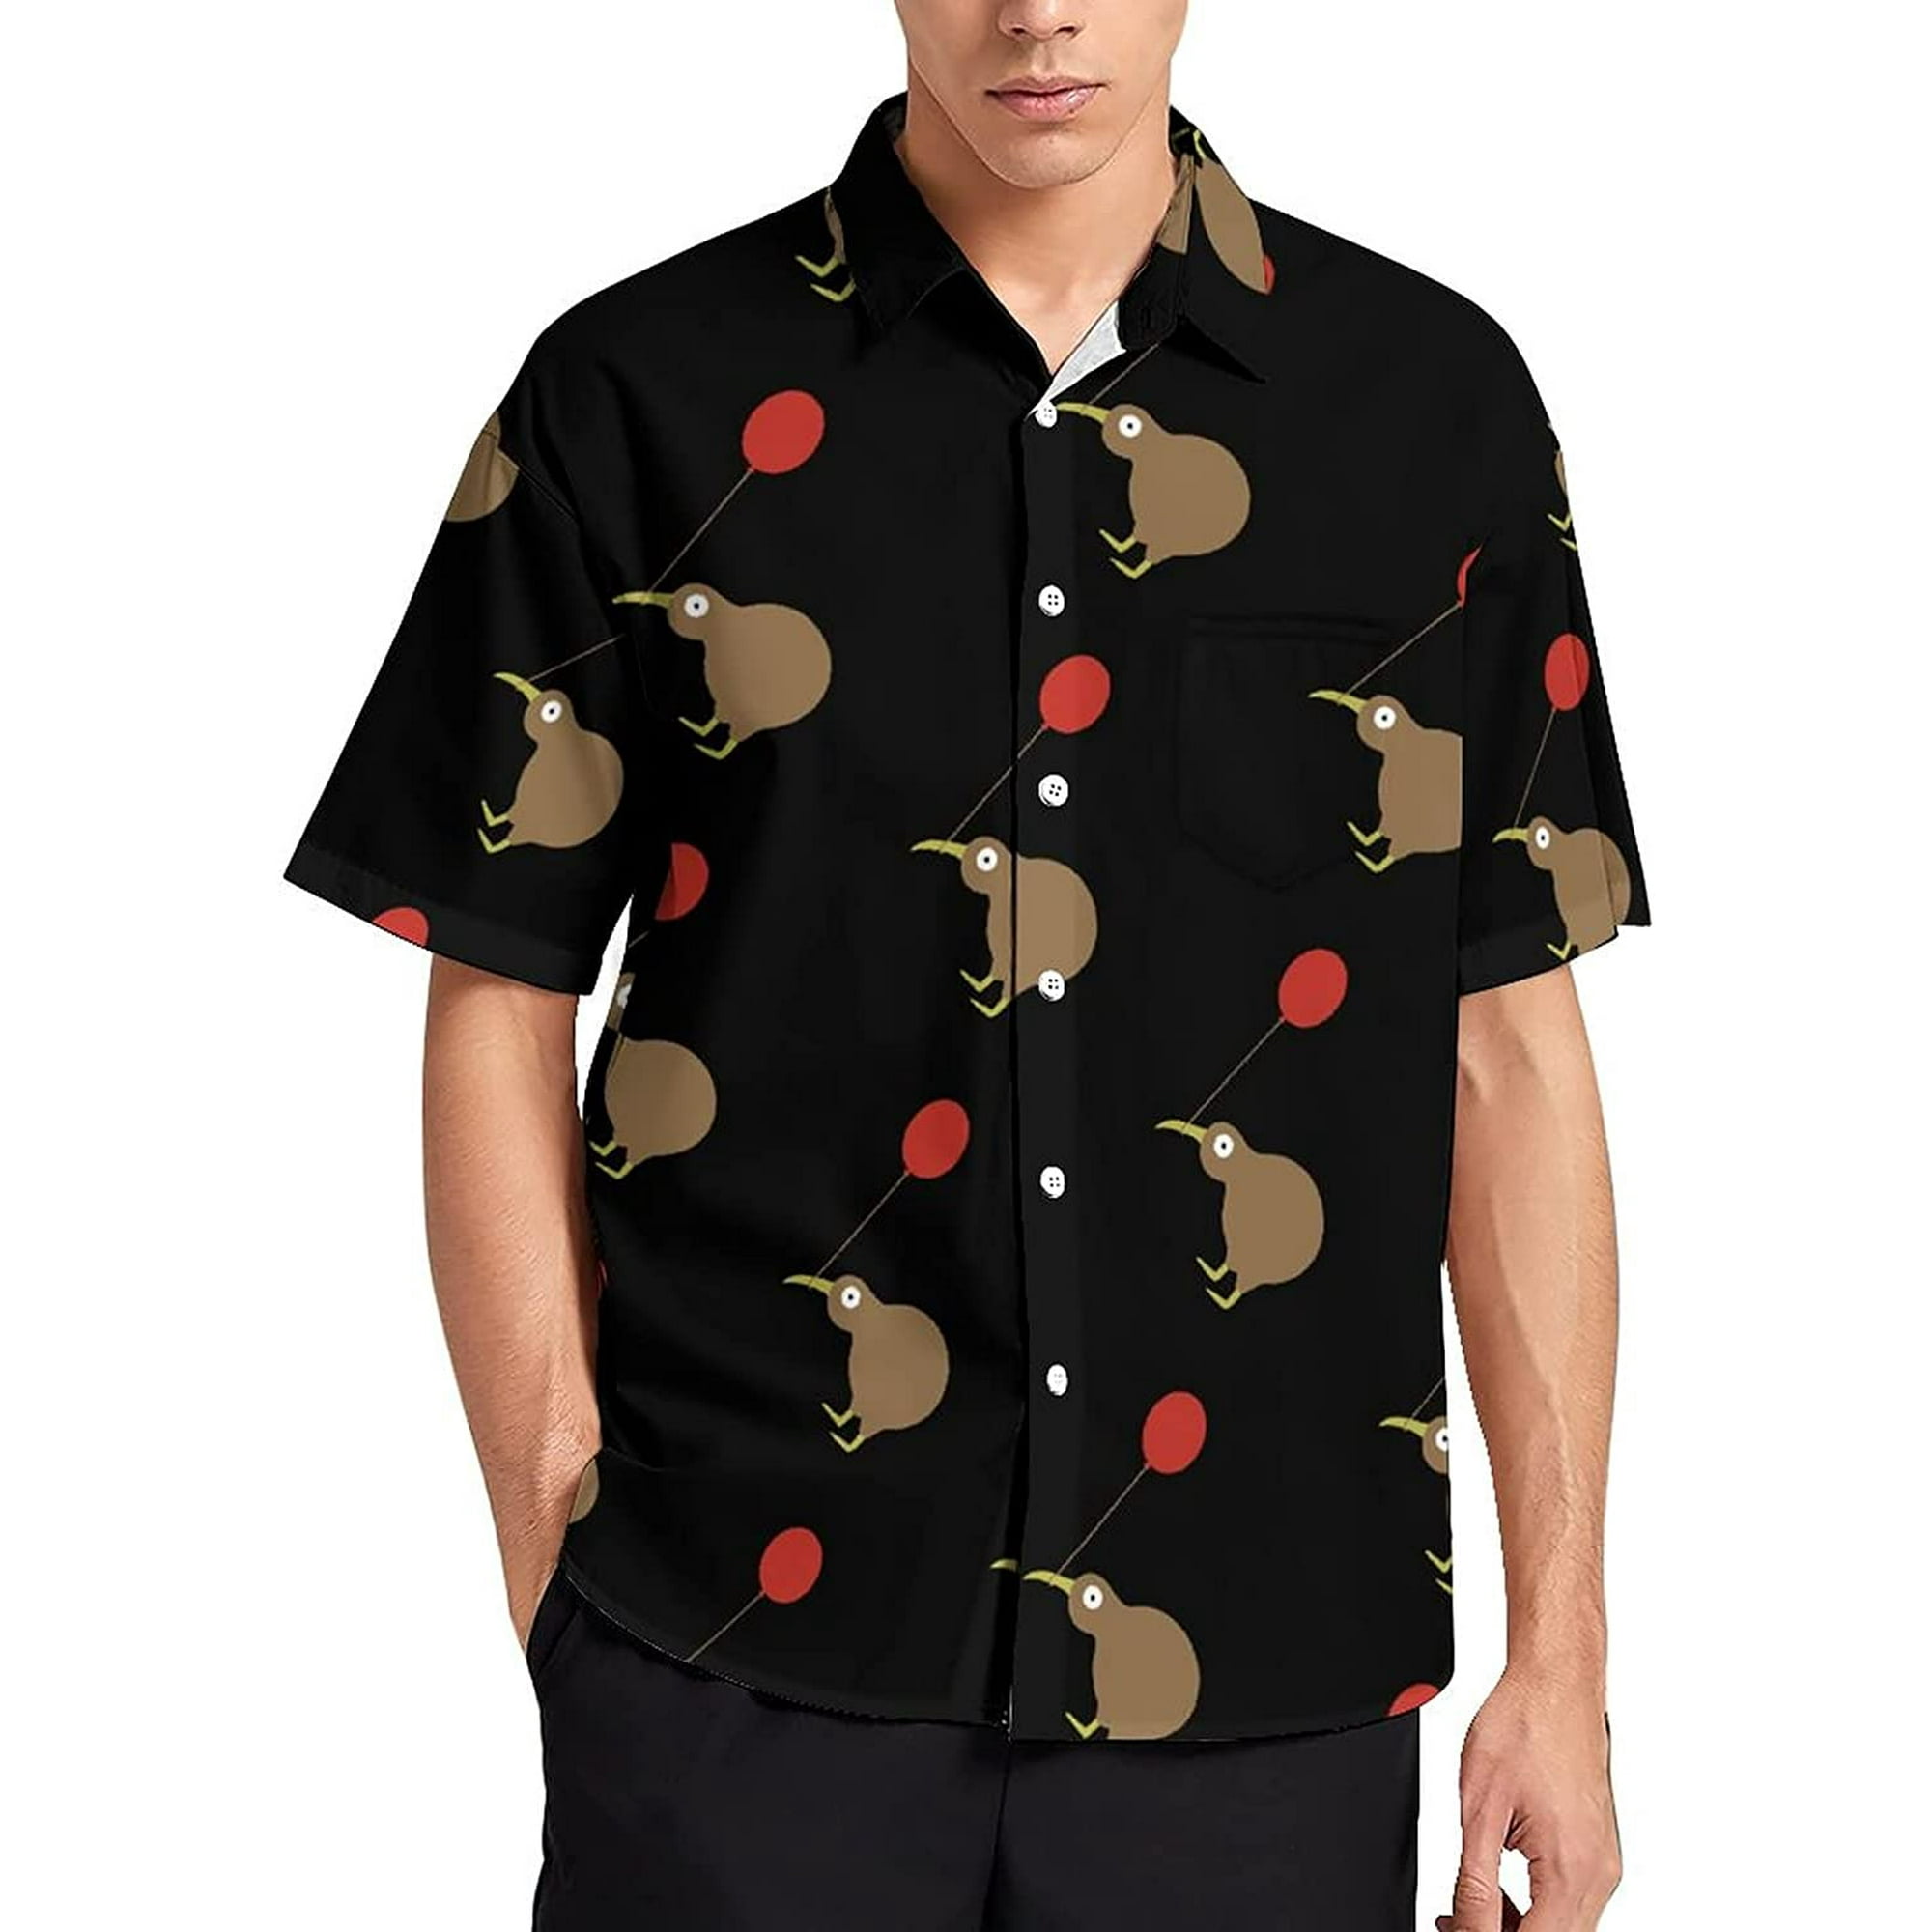 Kiwi Bird Men's Shirt Button Down Short Sleeve Hawaiian Shirts Top